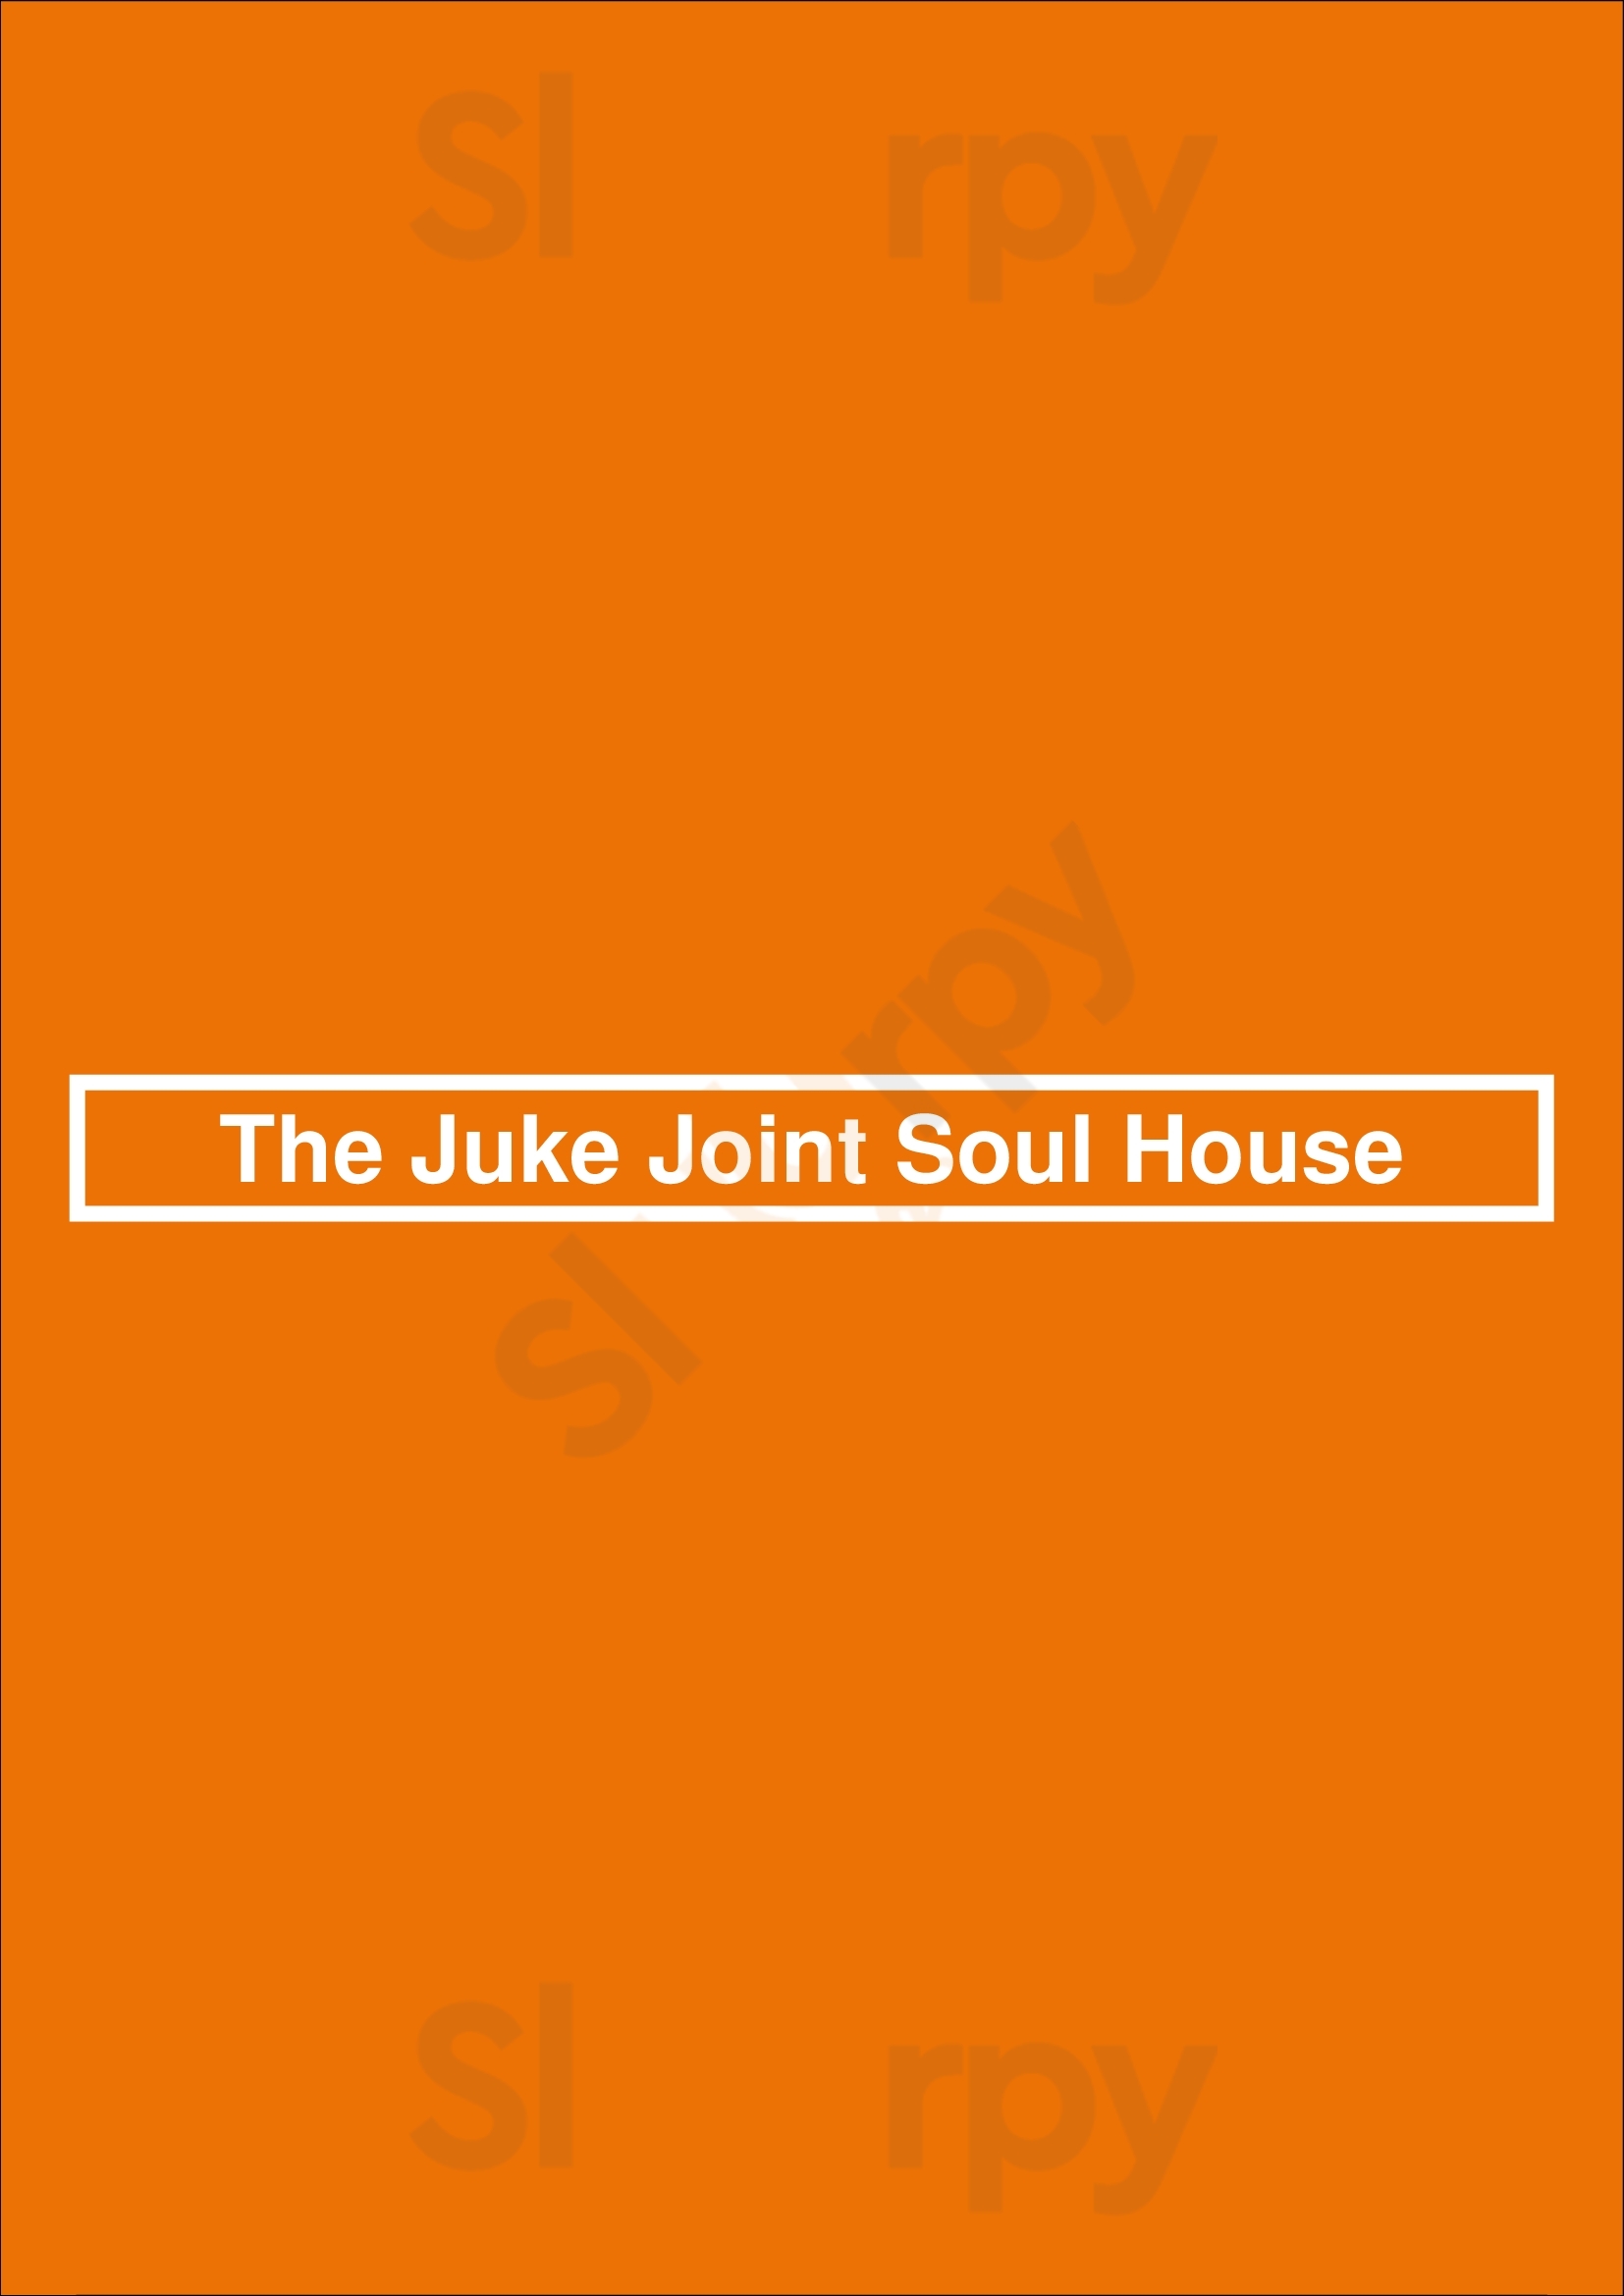 The Juke Joint Soul House Bloomfield Menu - 1